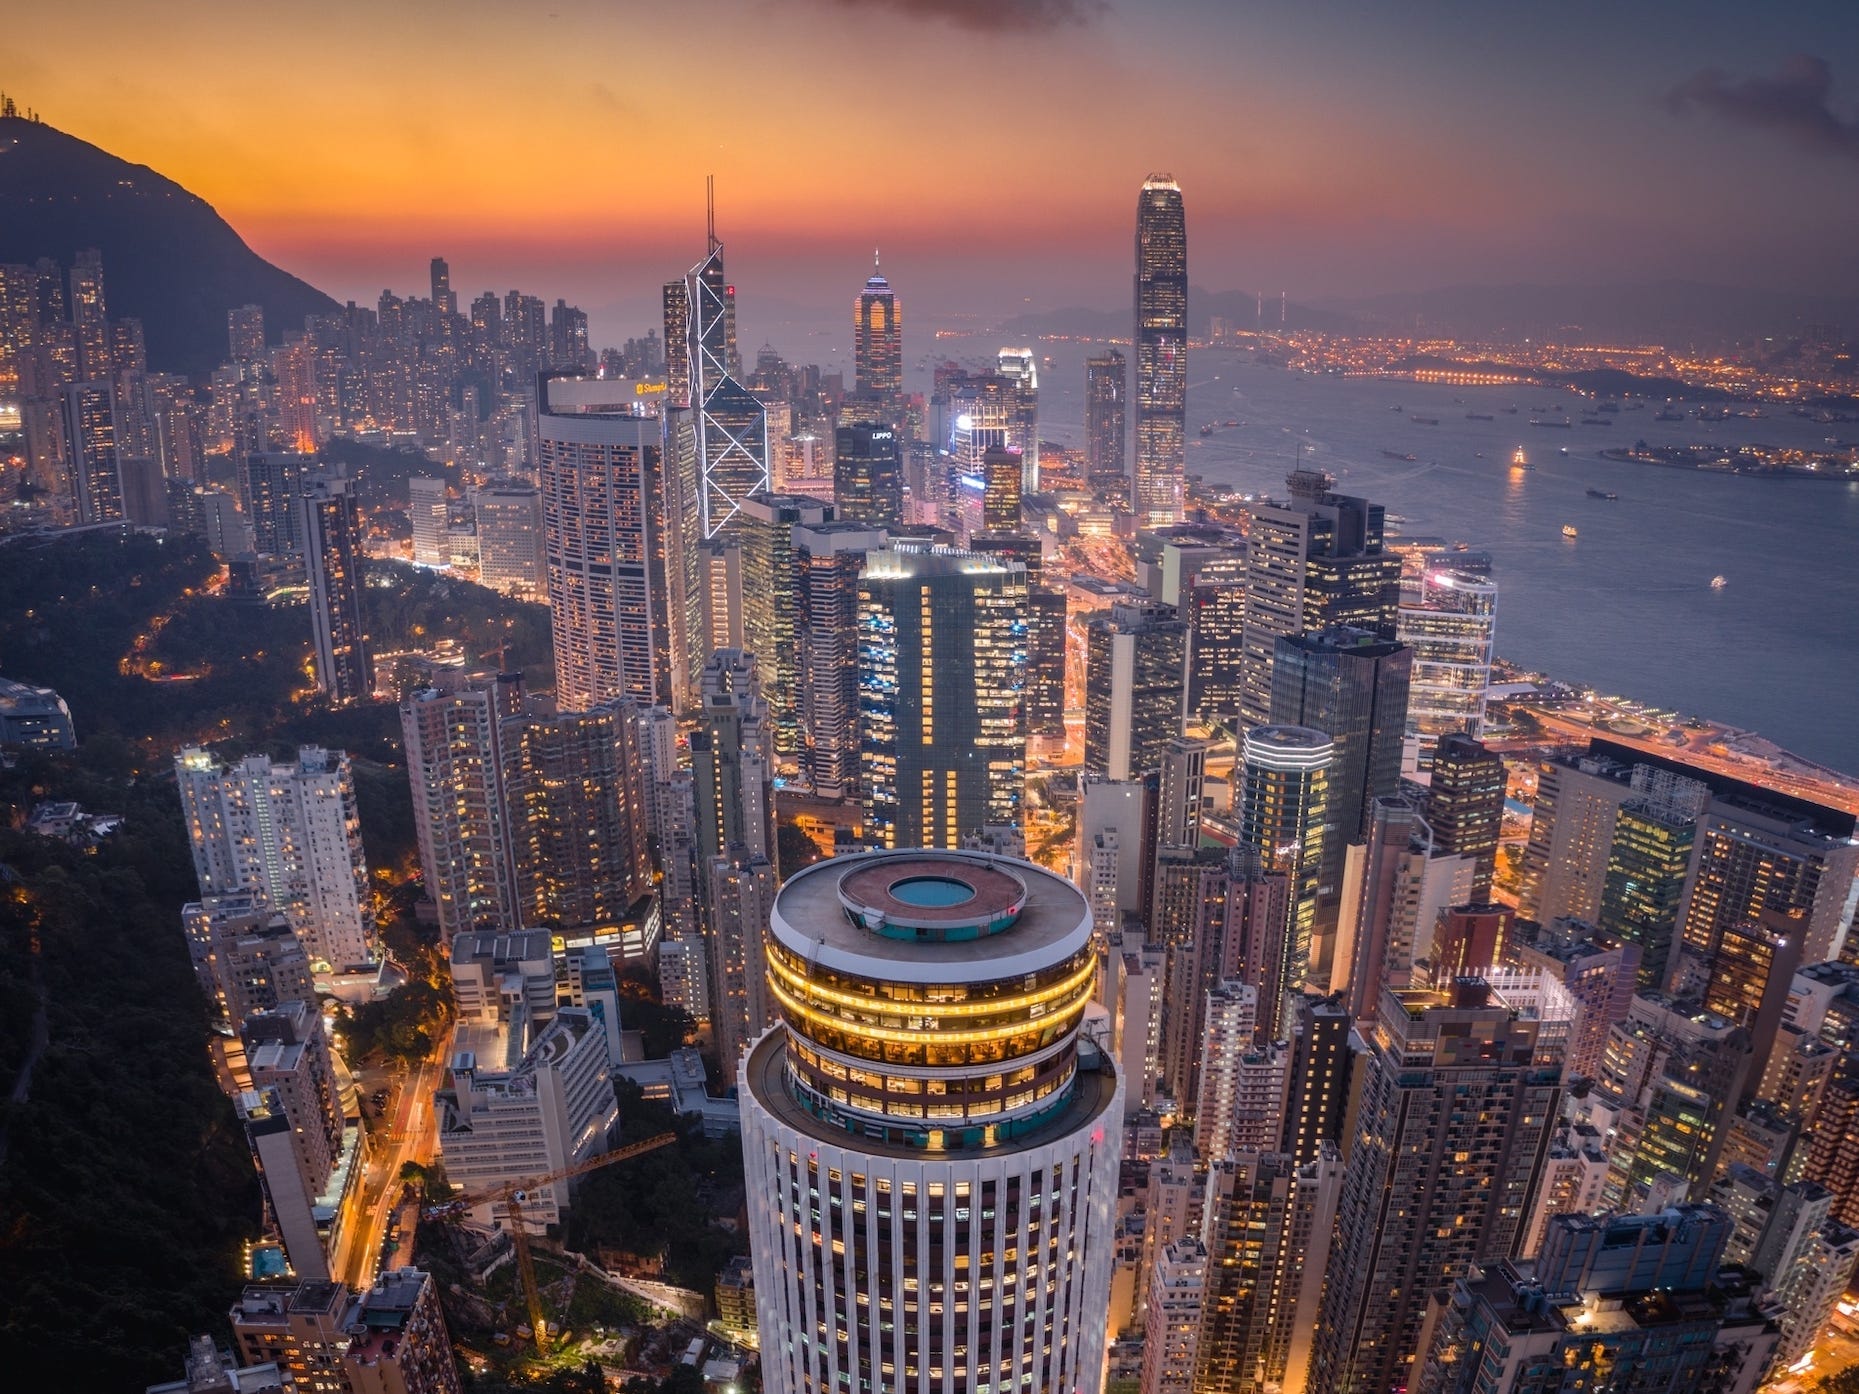 'Vibrant Hong Kong' by @leemumford8 (UK)